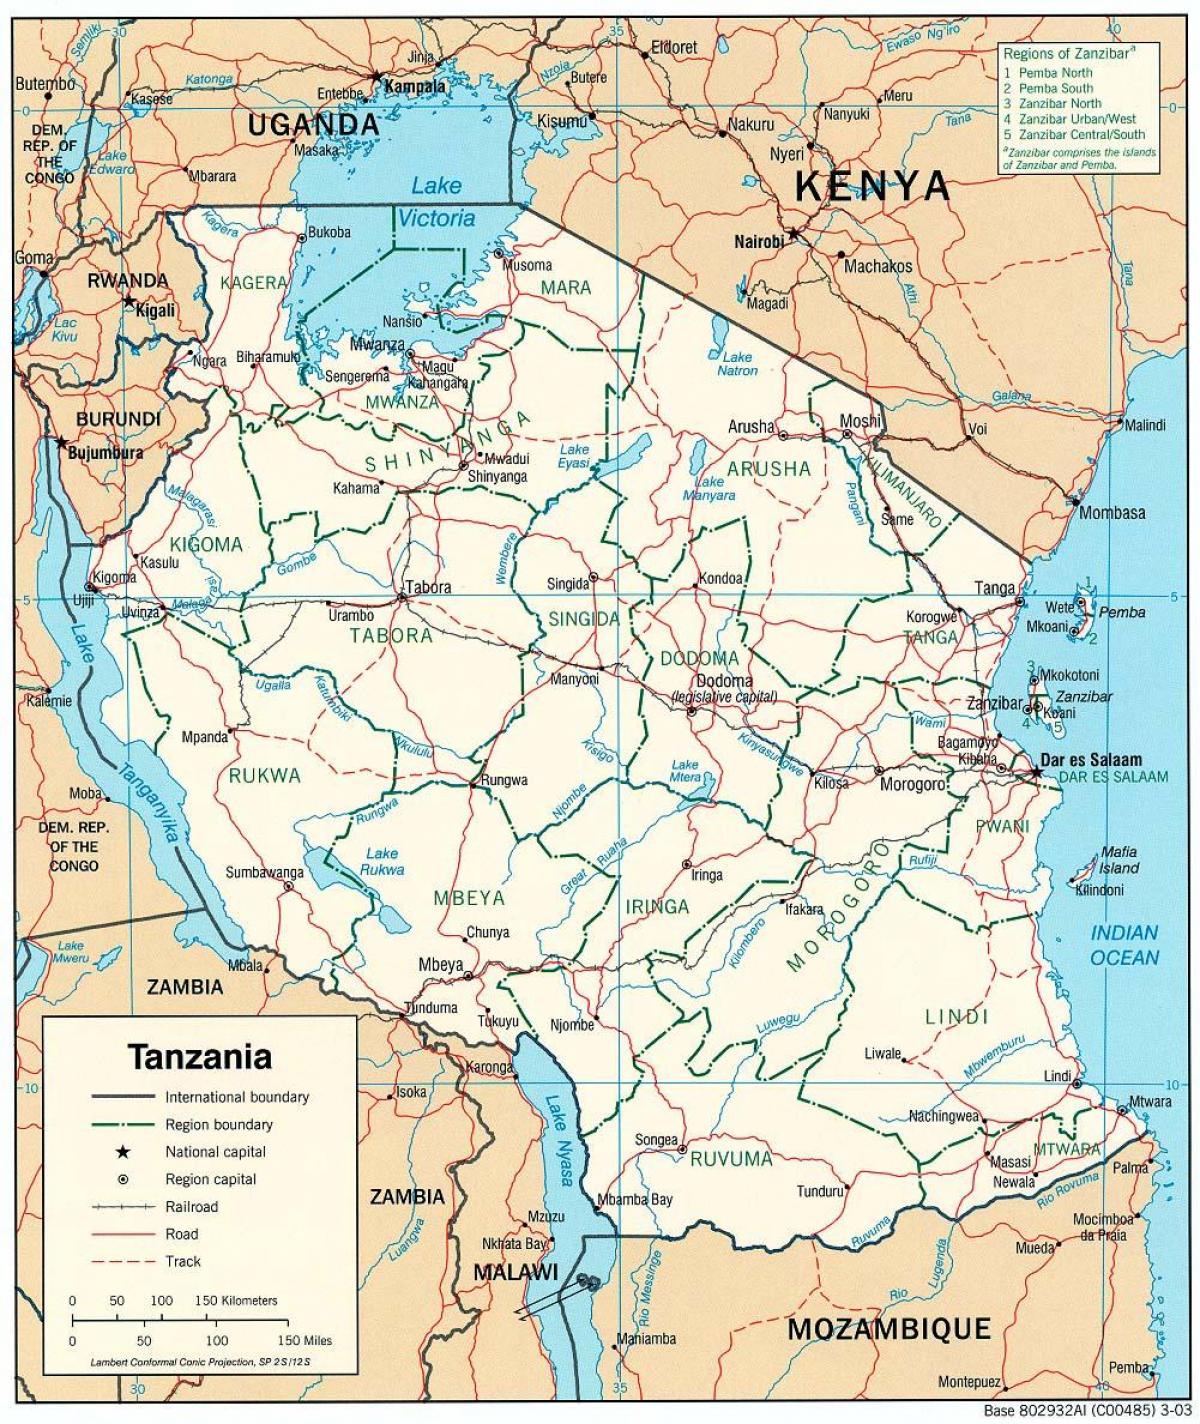 kart over tanzania med byer